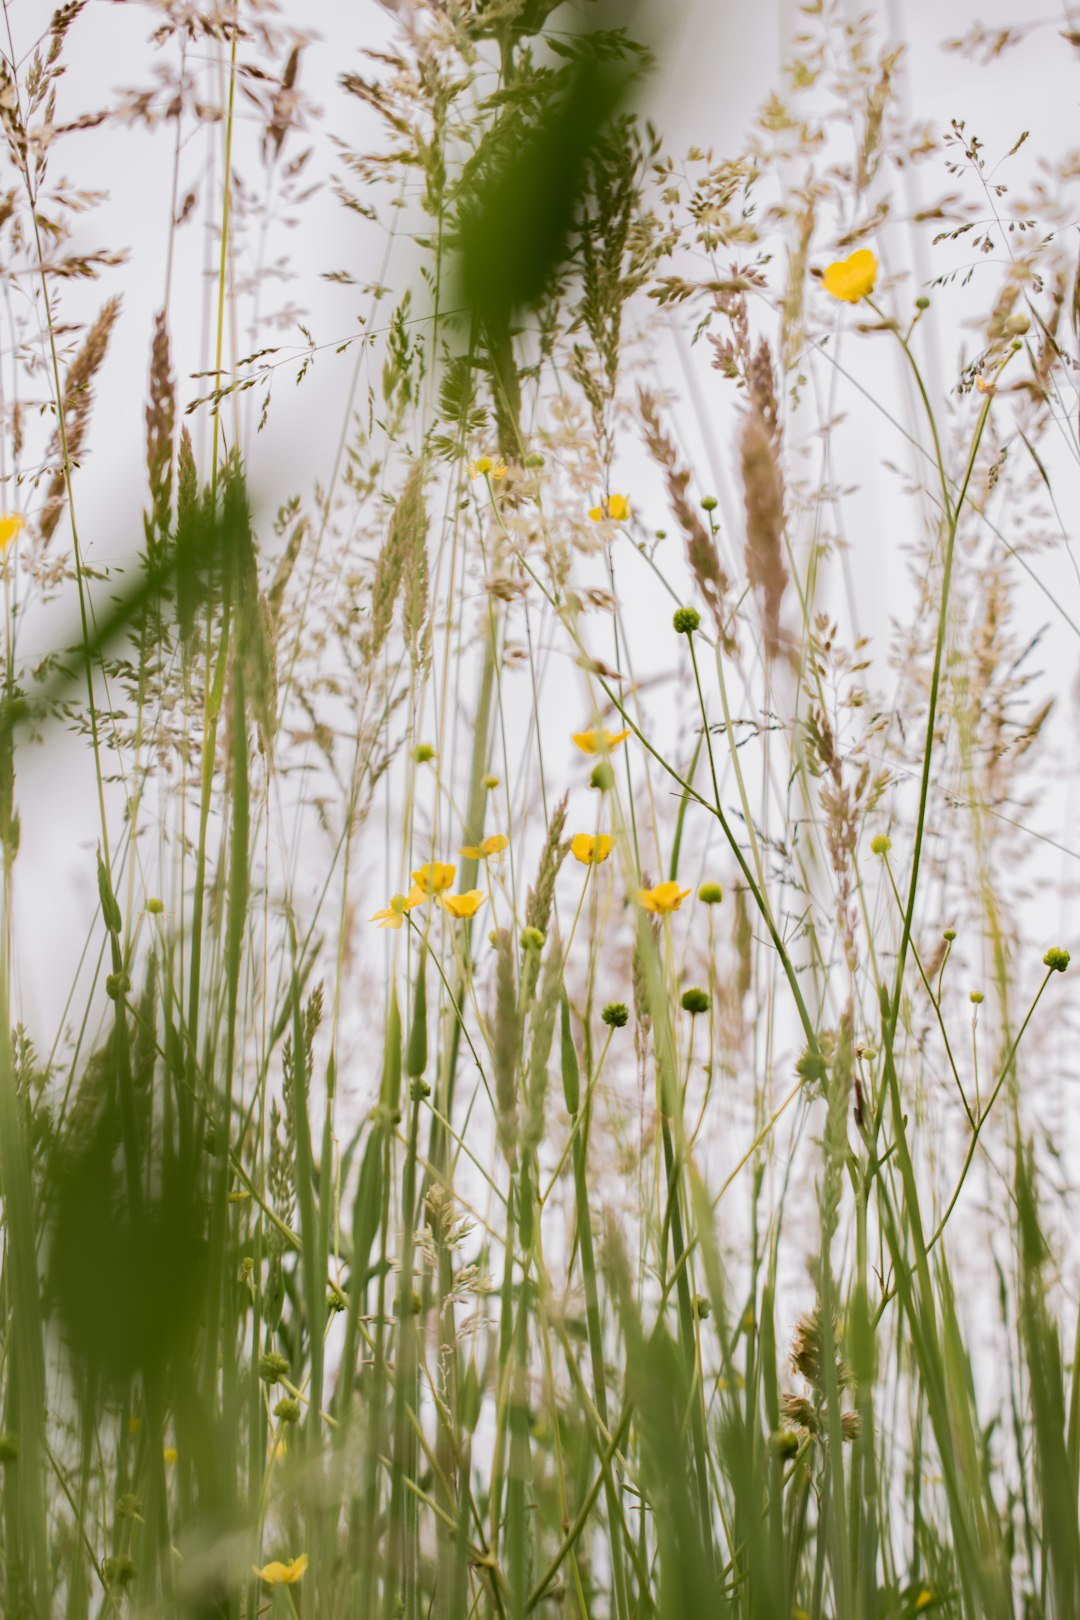 yellow flower in green grass field during daytime